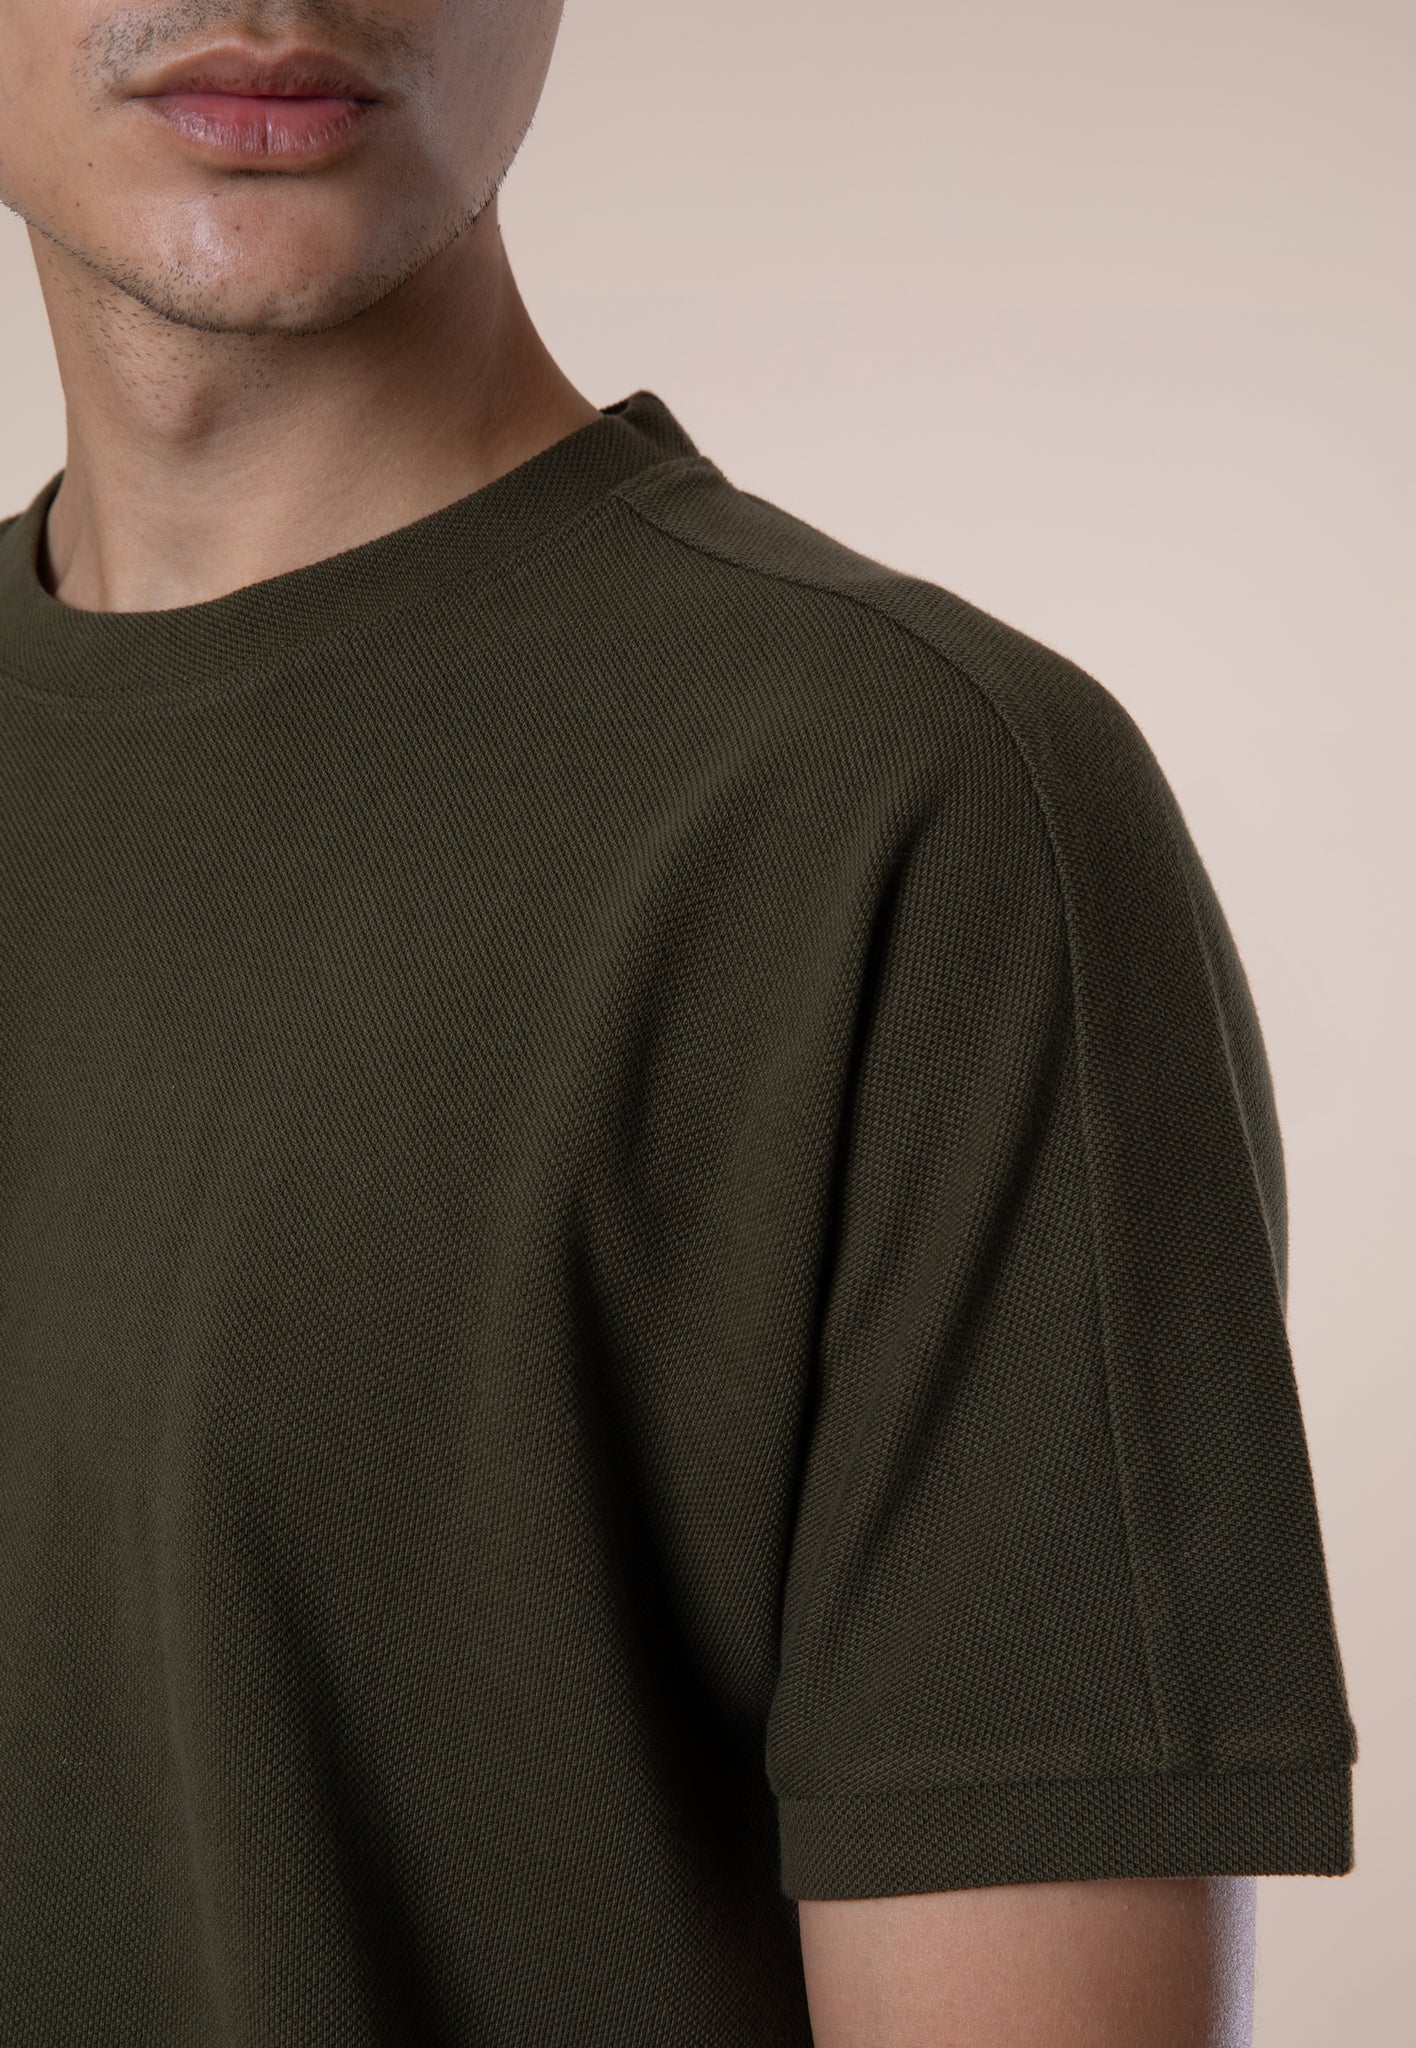 Dolman Sleeve Tshirt, Piqué Cotton, Seaweed